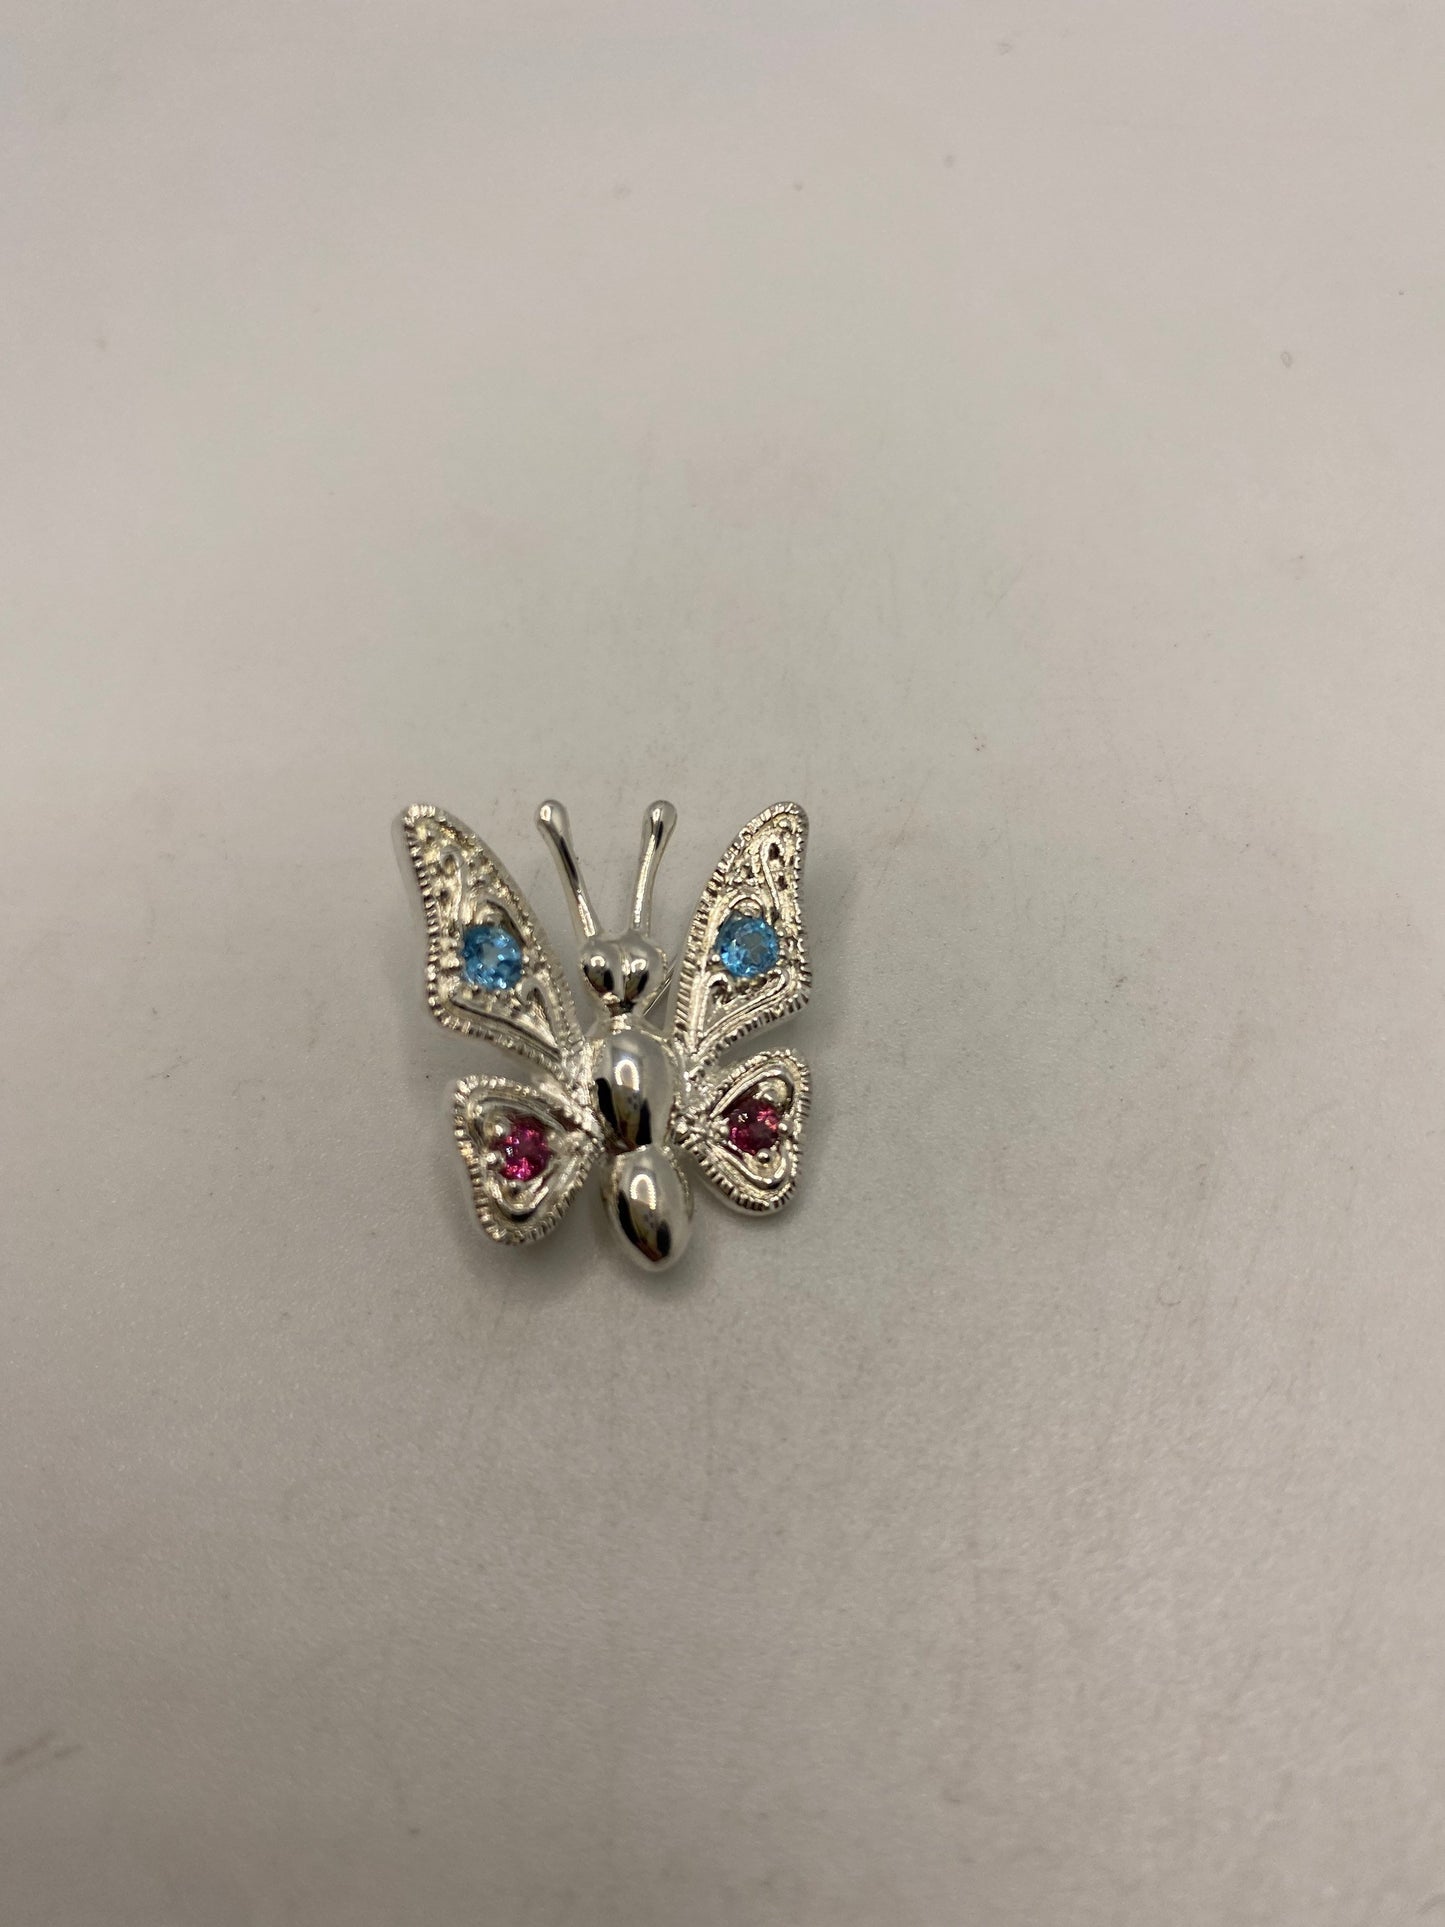 Vintage Blue Topaz and Garnet pin 925 Sterling Silver Butterfly Brooch